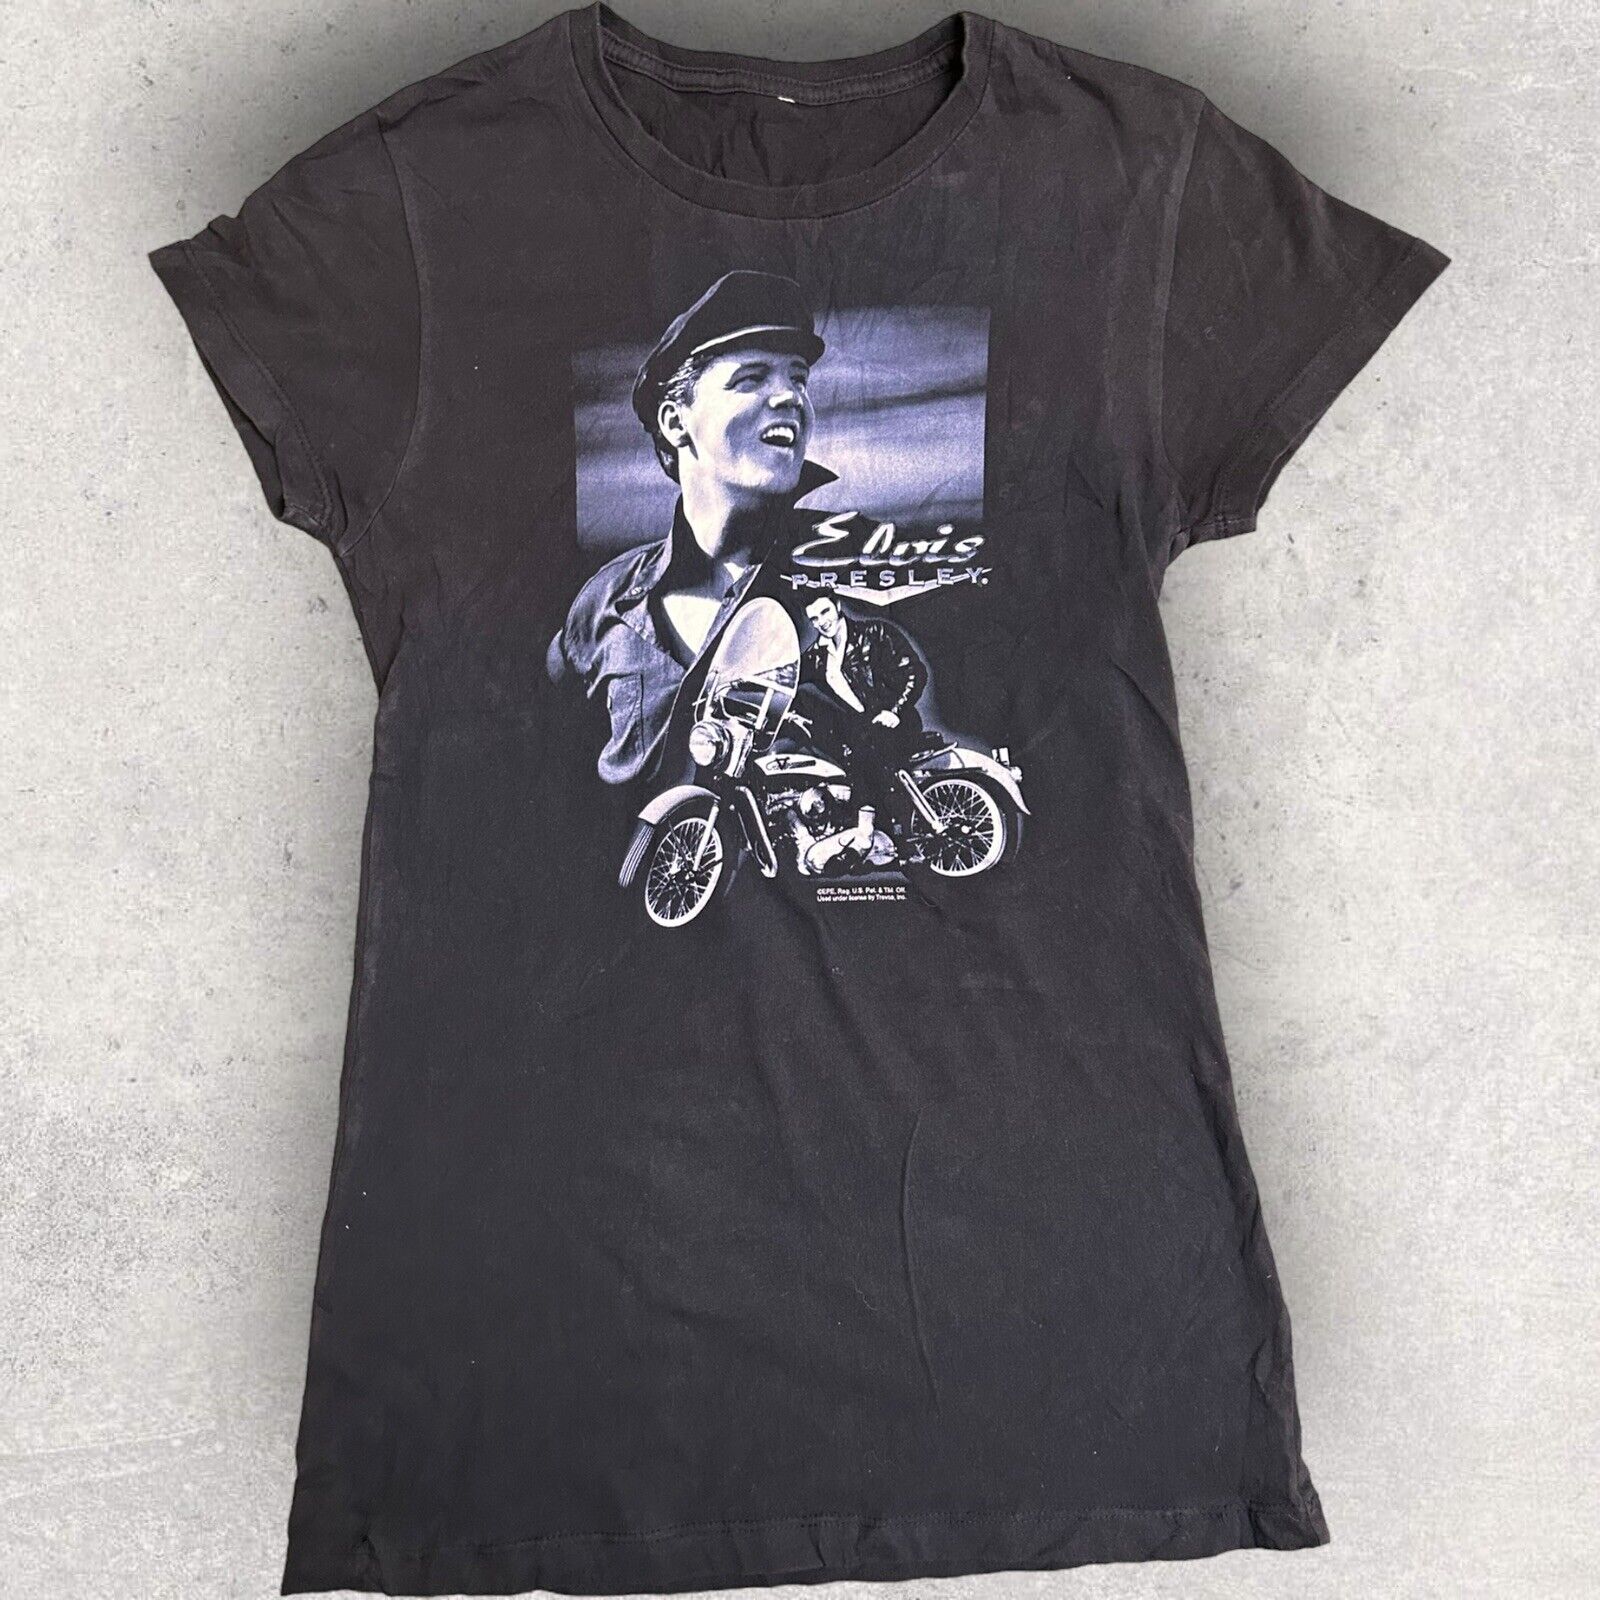 Elvis Presley Motorcycle Graphic T-Shirt Women’s Black Short Sleeve